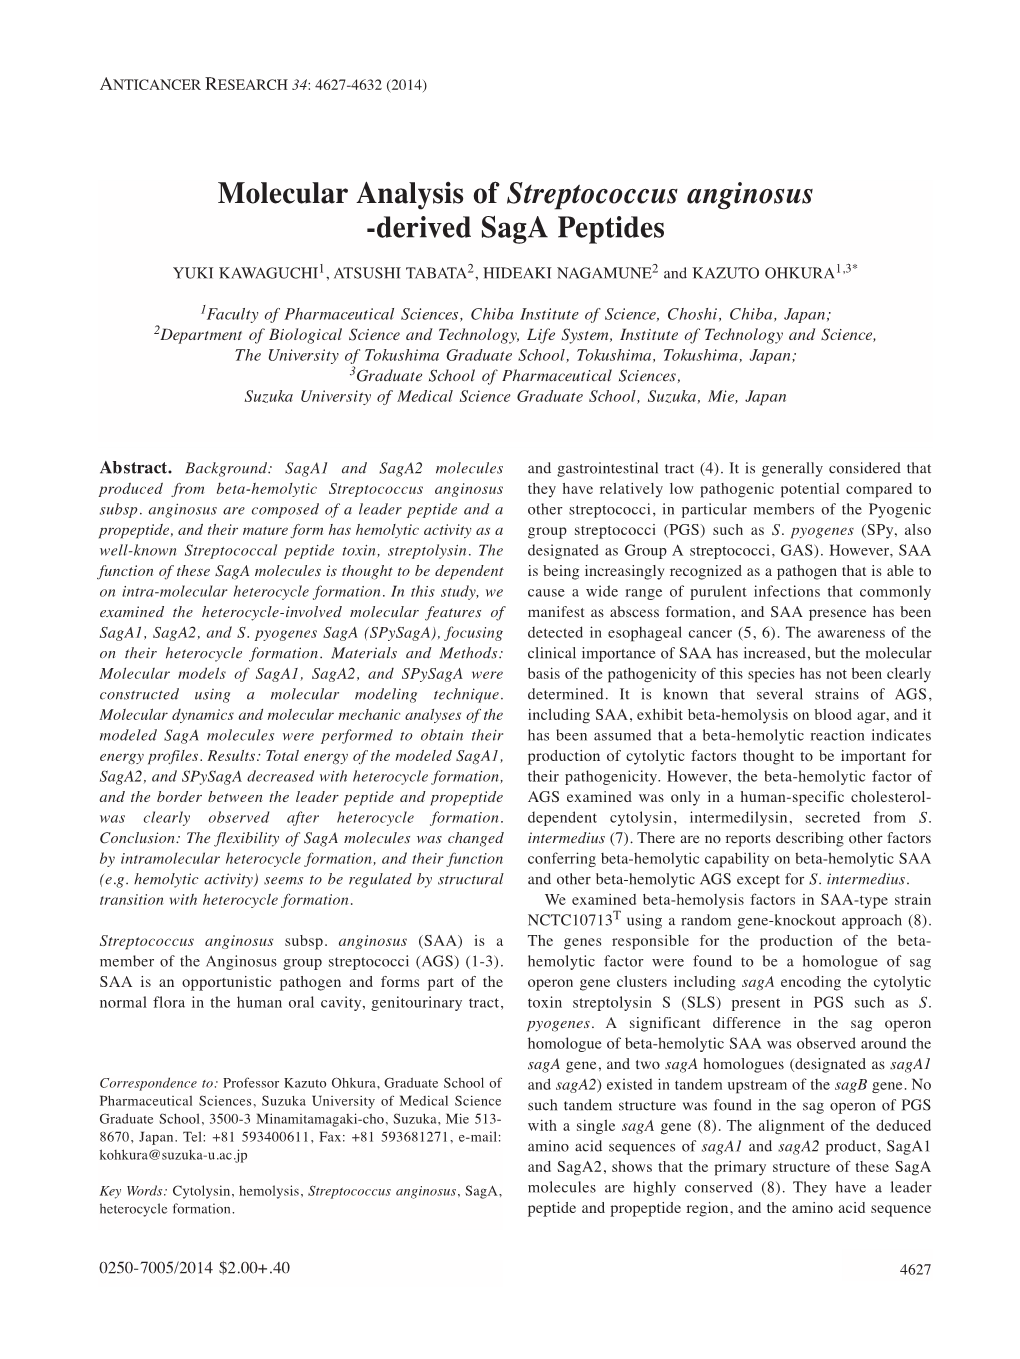 Molecular Analysis of Streptococcus Anginosus -Derived Saga Peptides